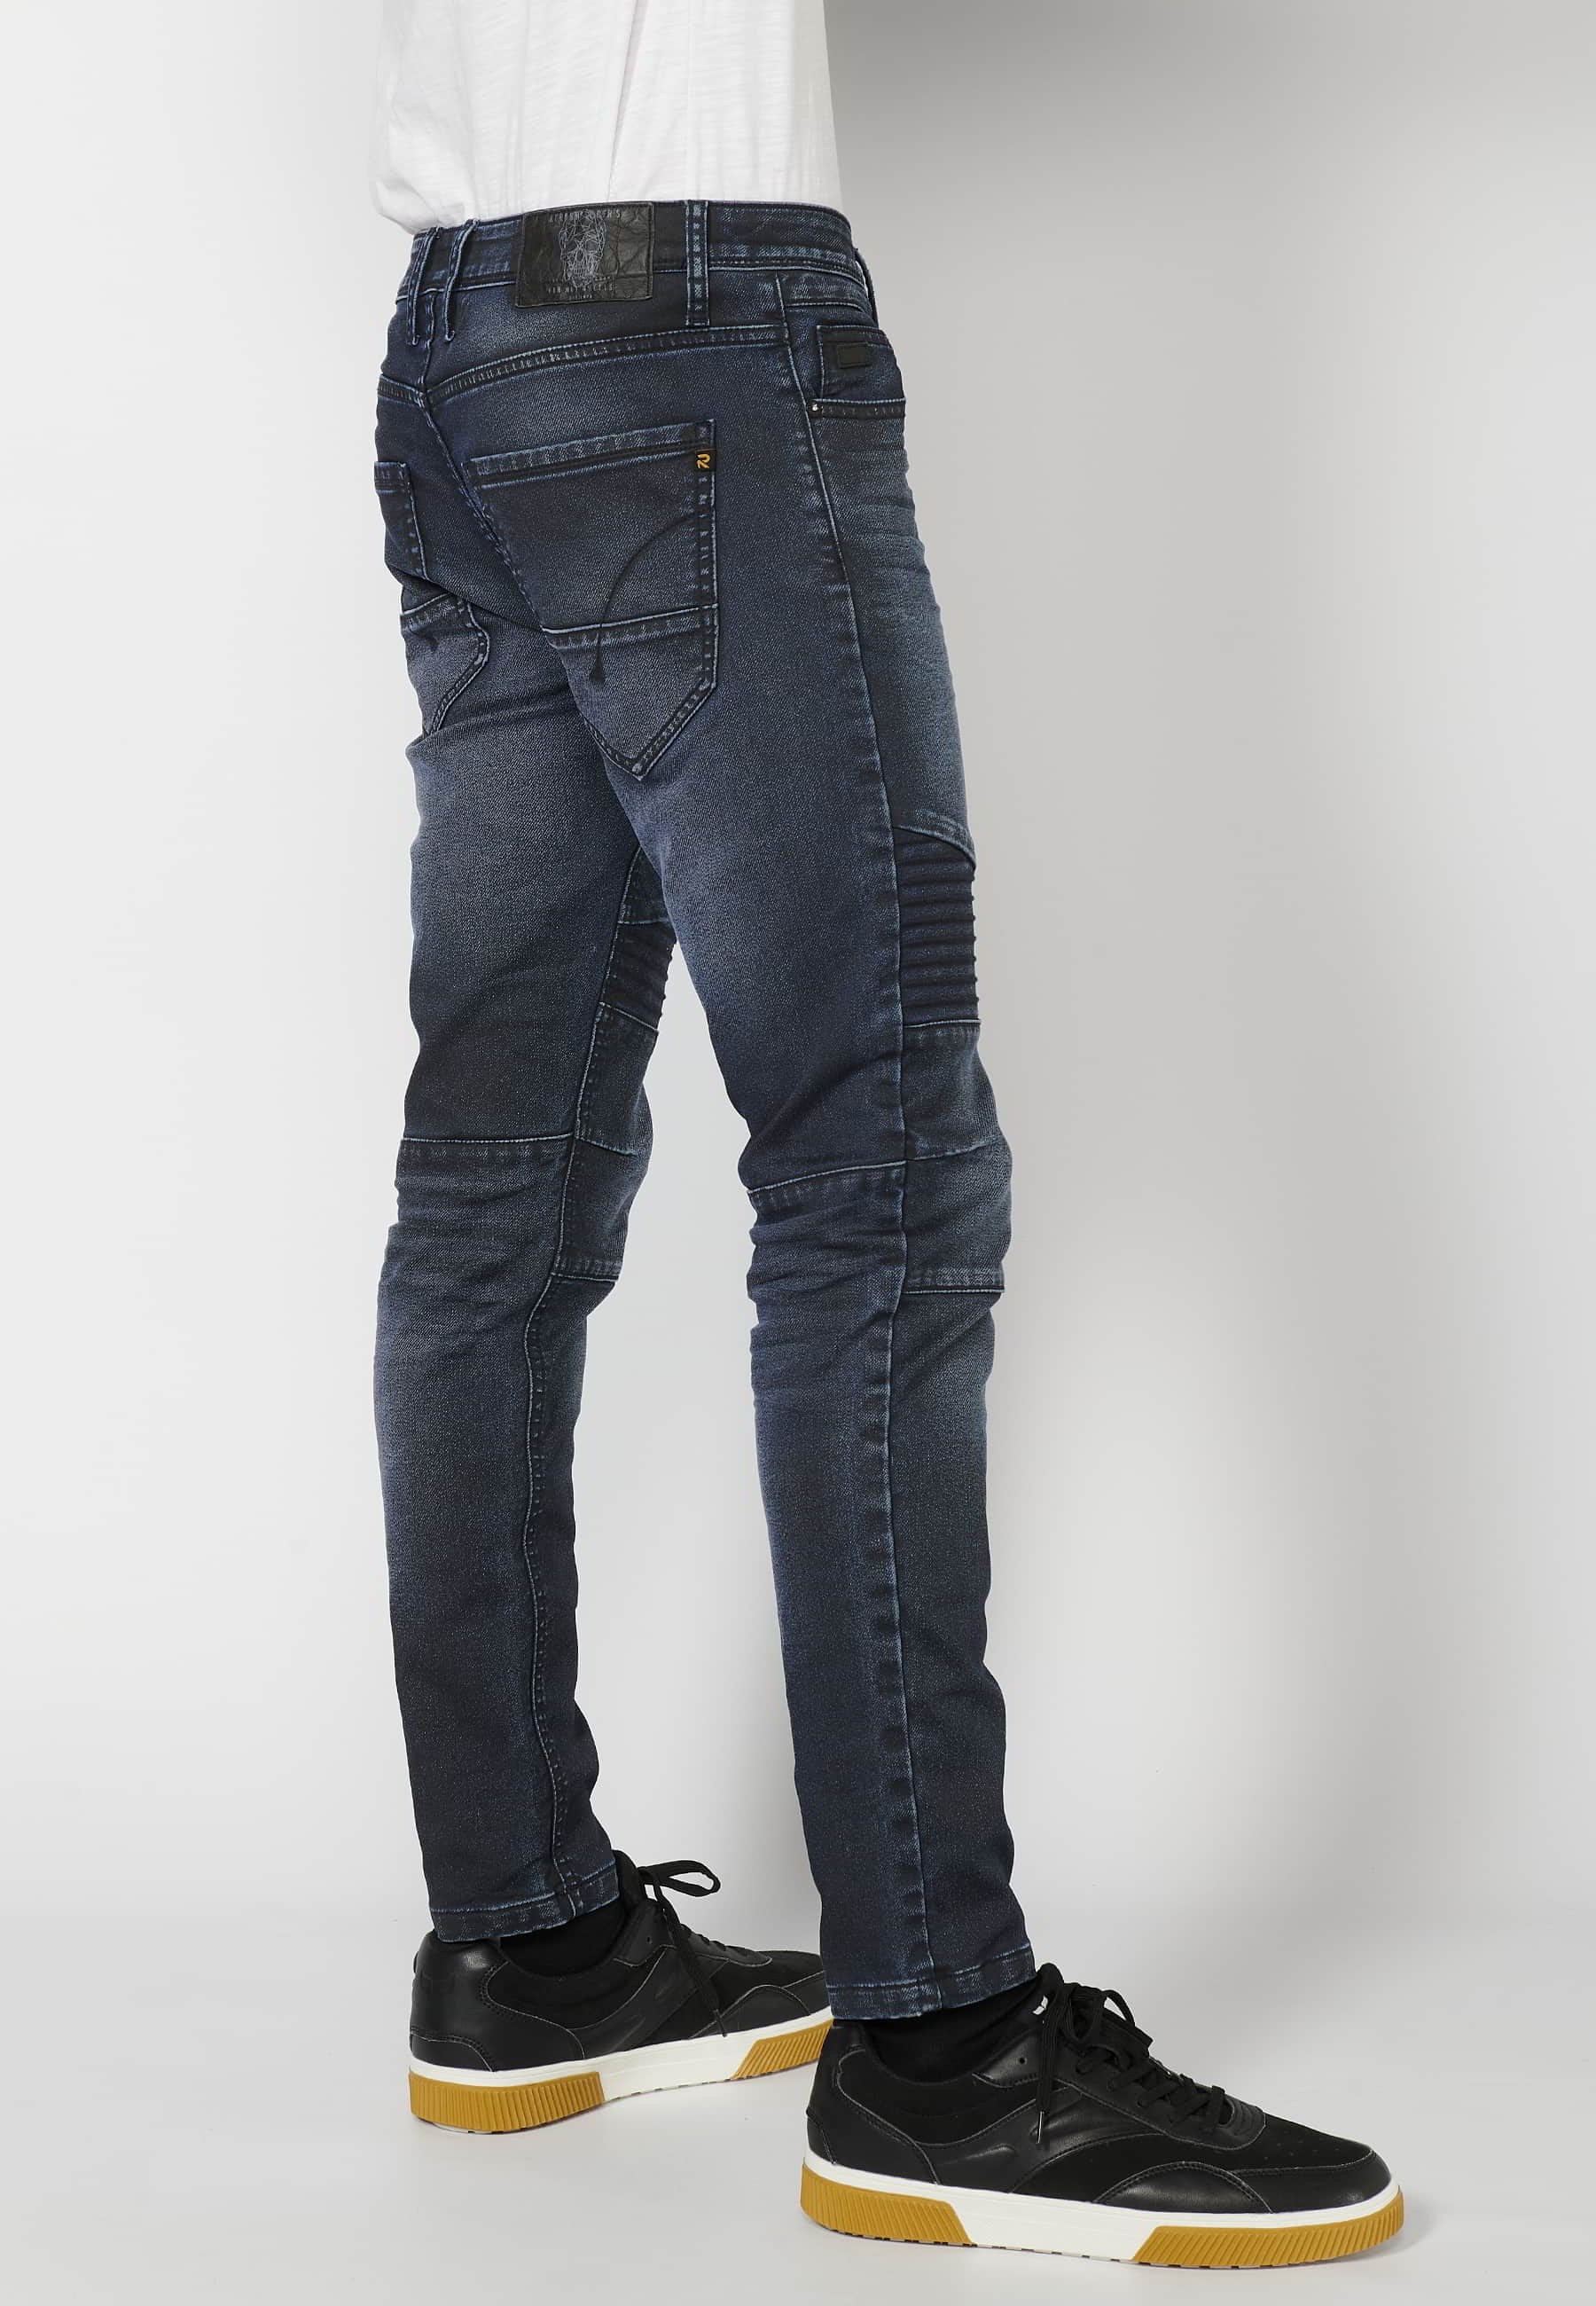 Pantalons llargs Jean skinny fit color blau fosc per a Home 5